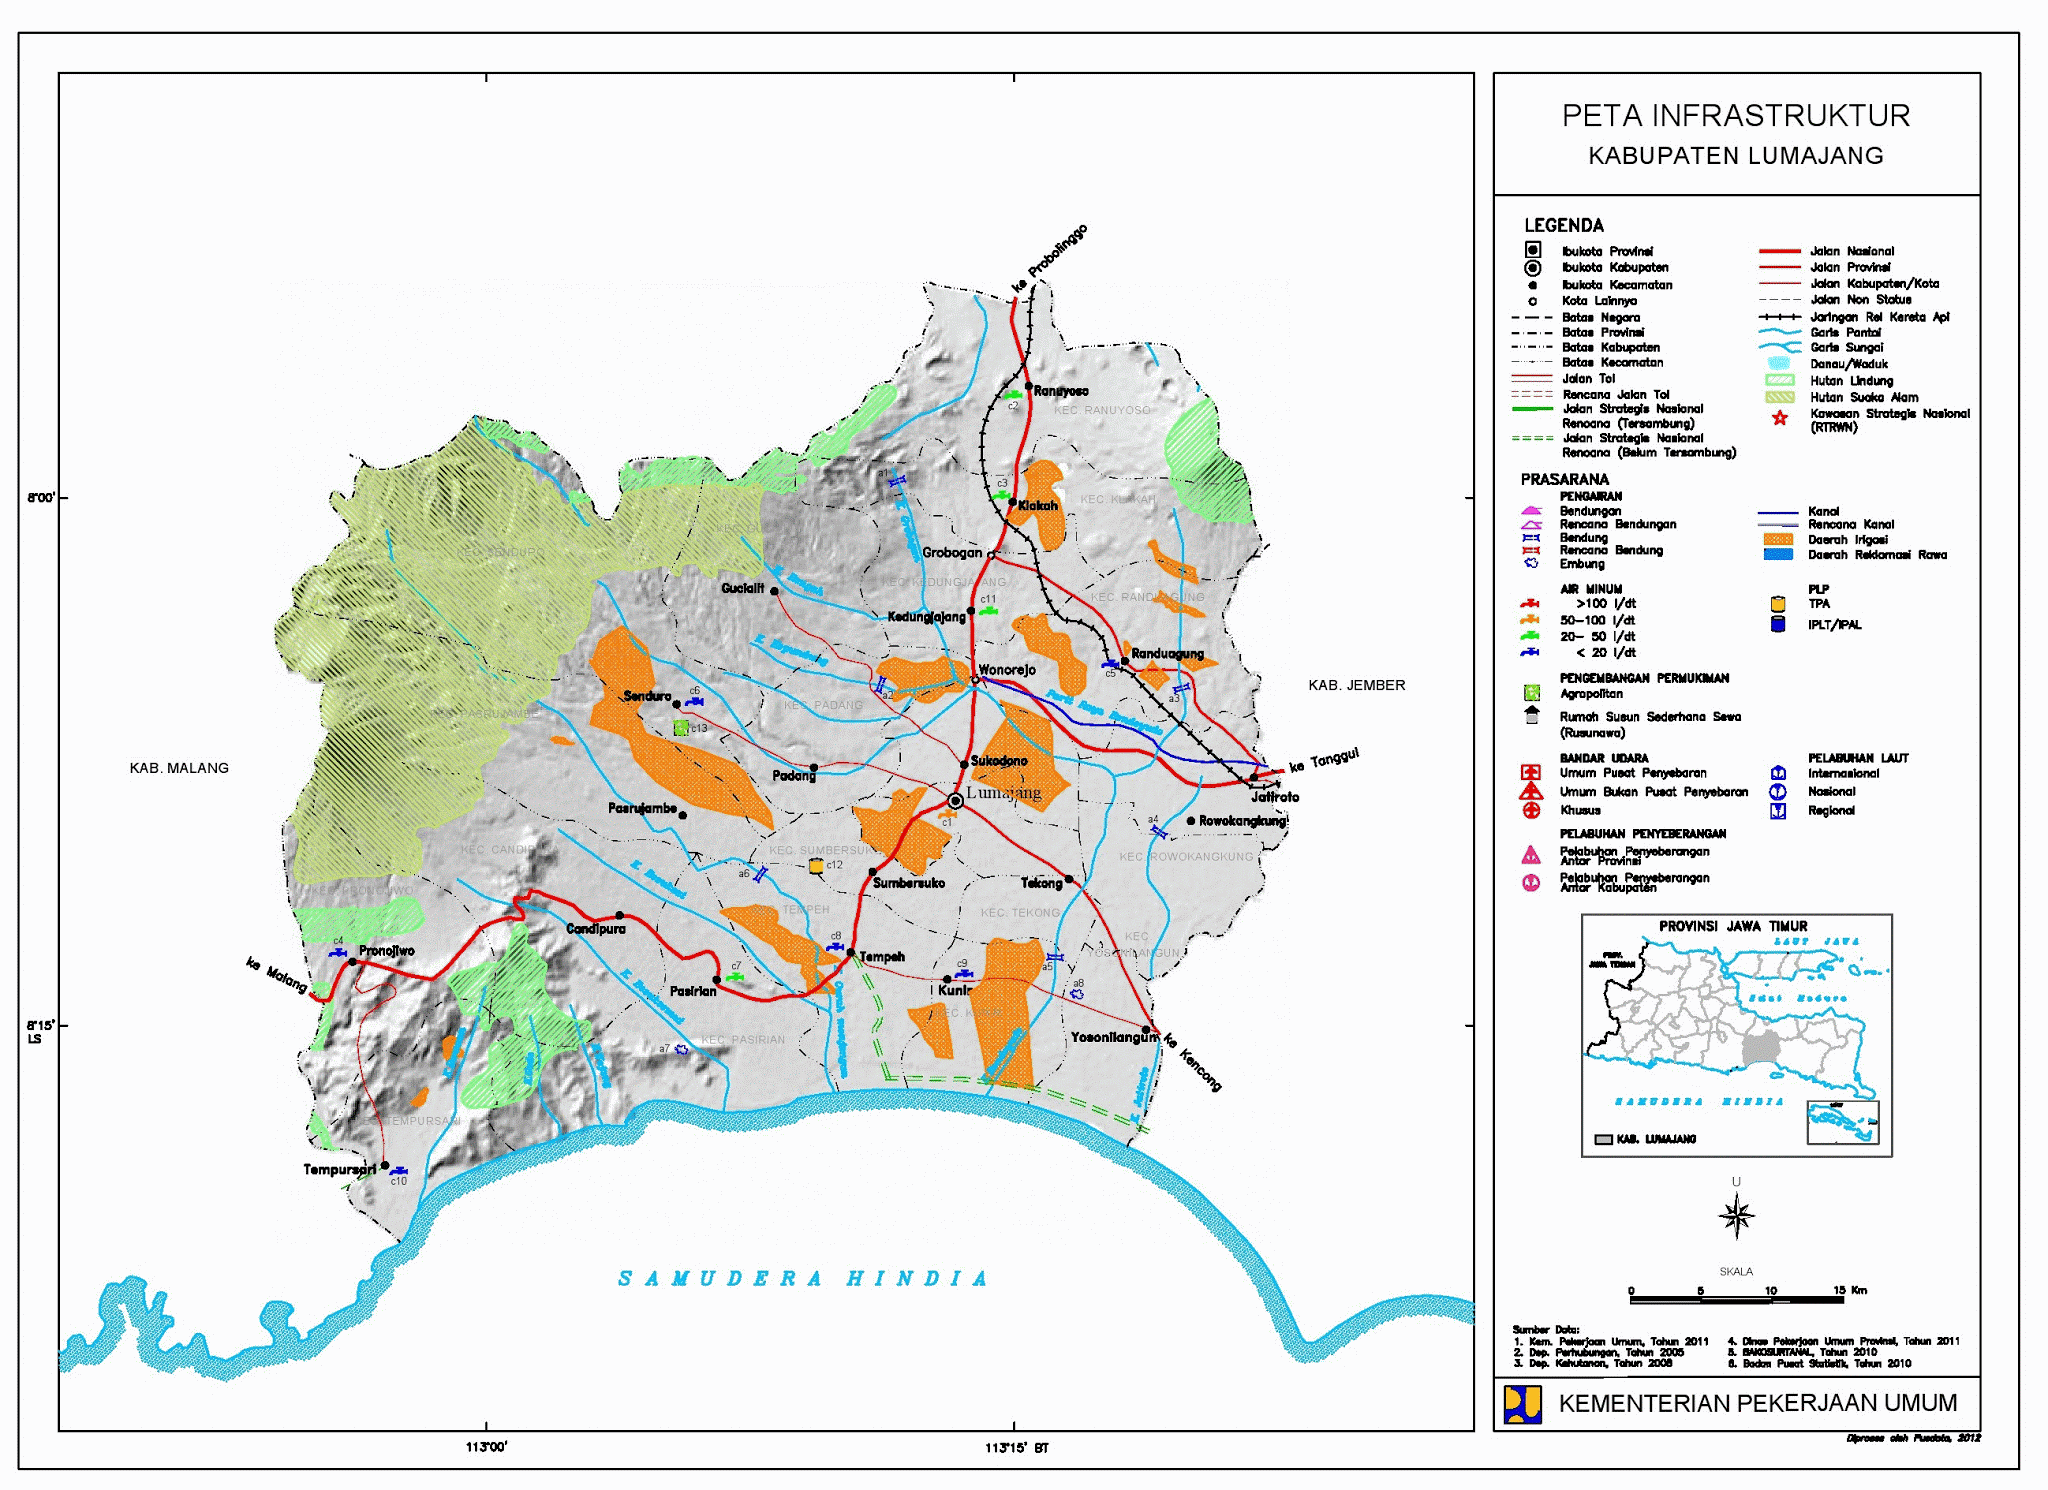  Peta  Kota Peta  Kabupaten  Lumajang